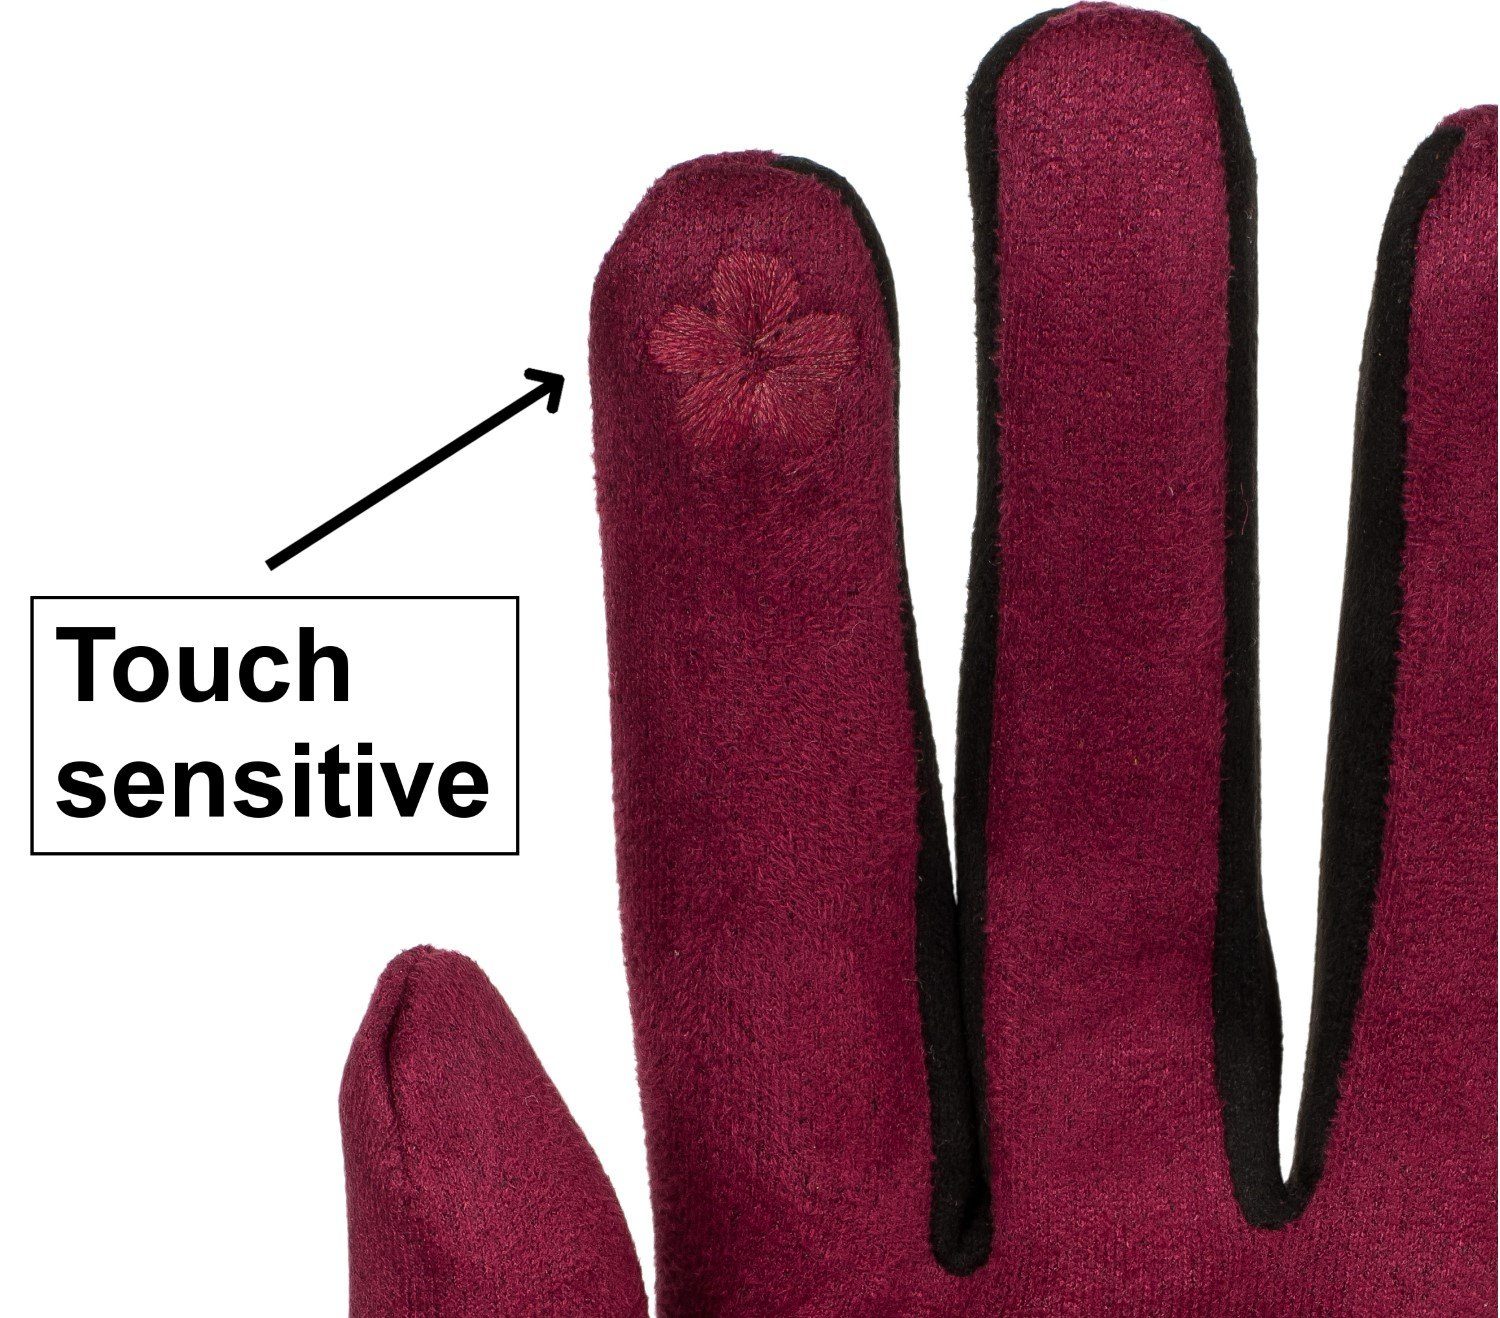 styleBREAKER Fleecehandschuhe Touchscreen Handschuhe Kontrast Bordeaux-Rot